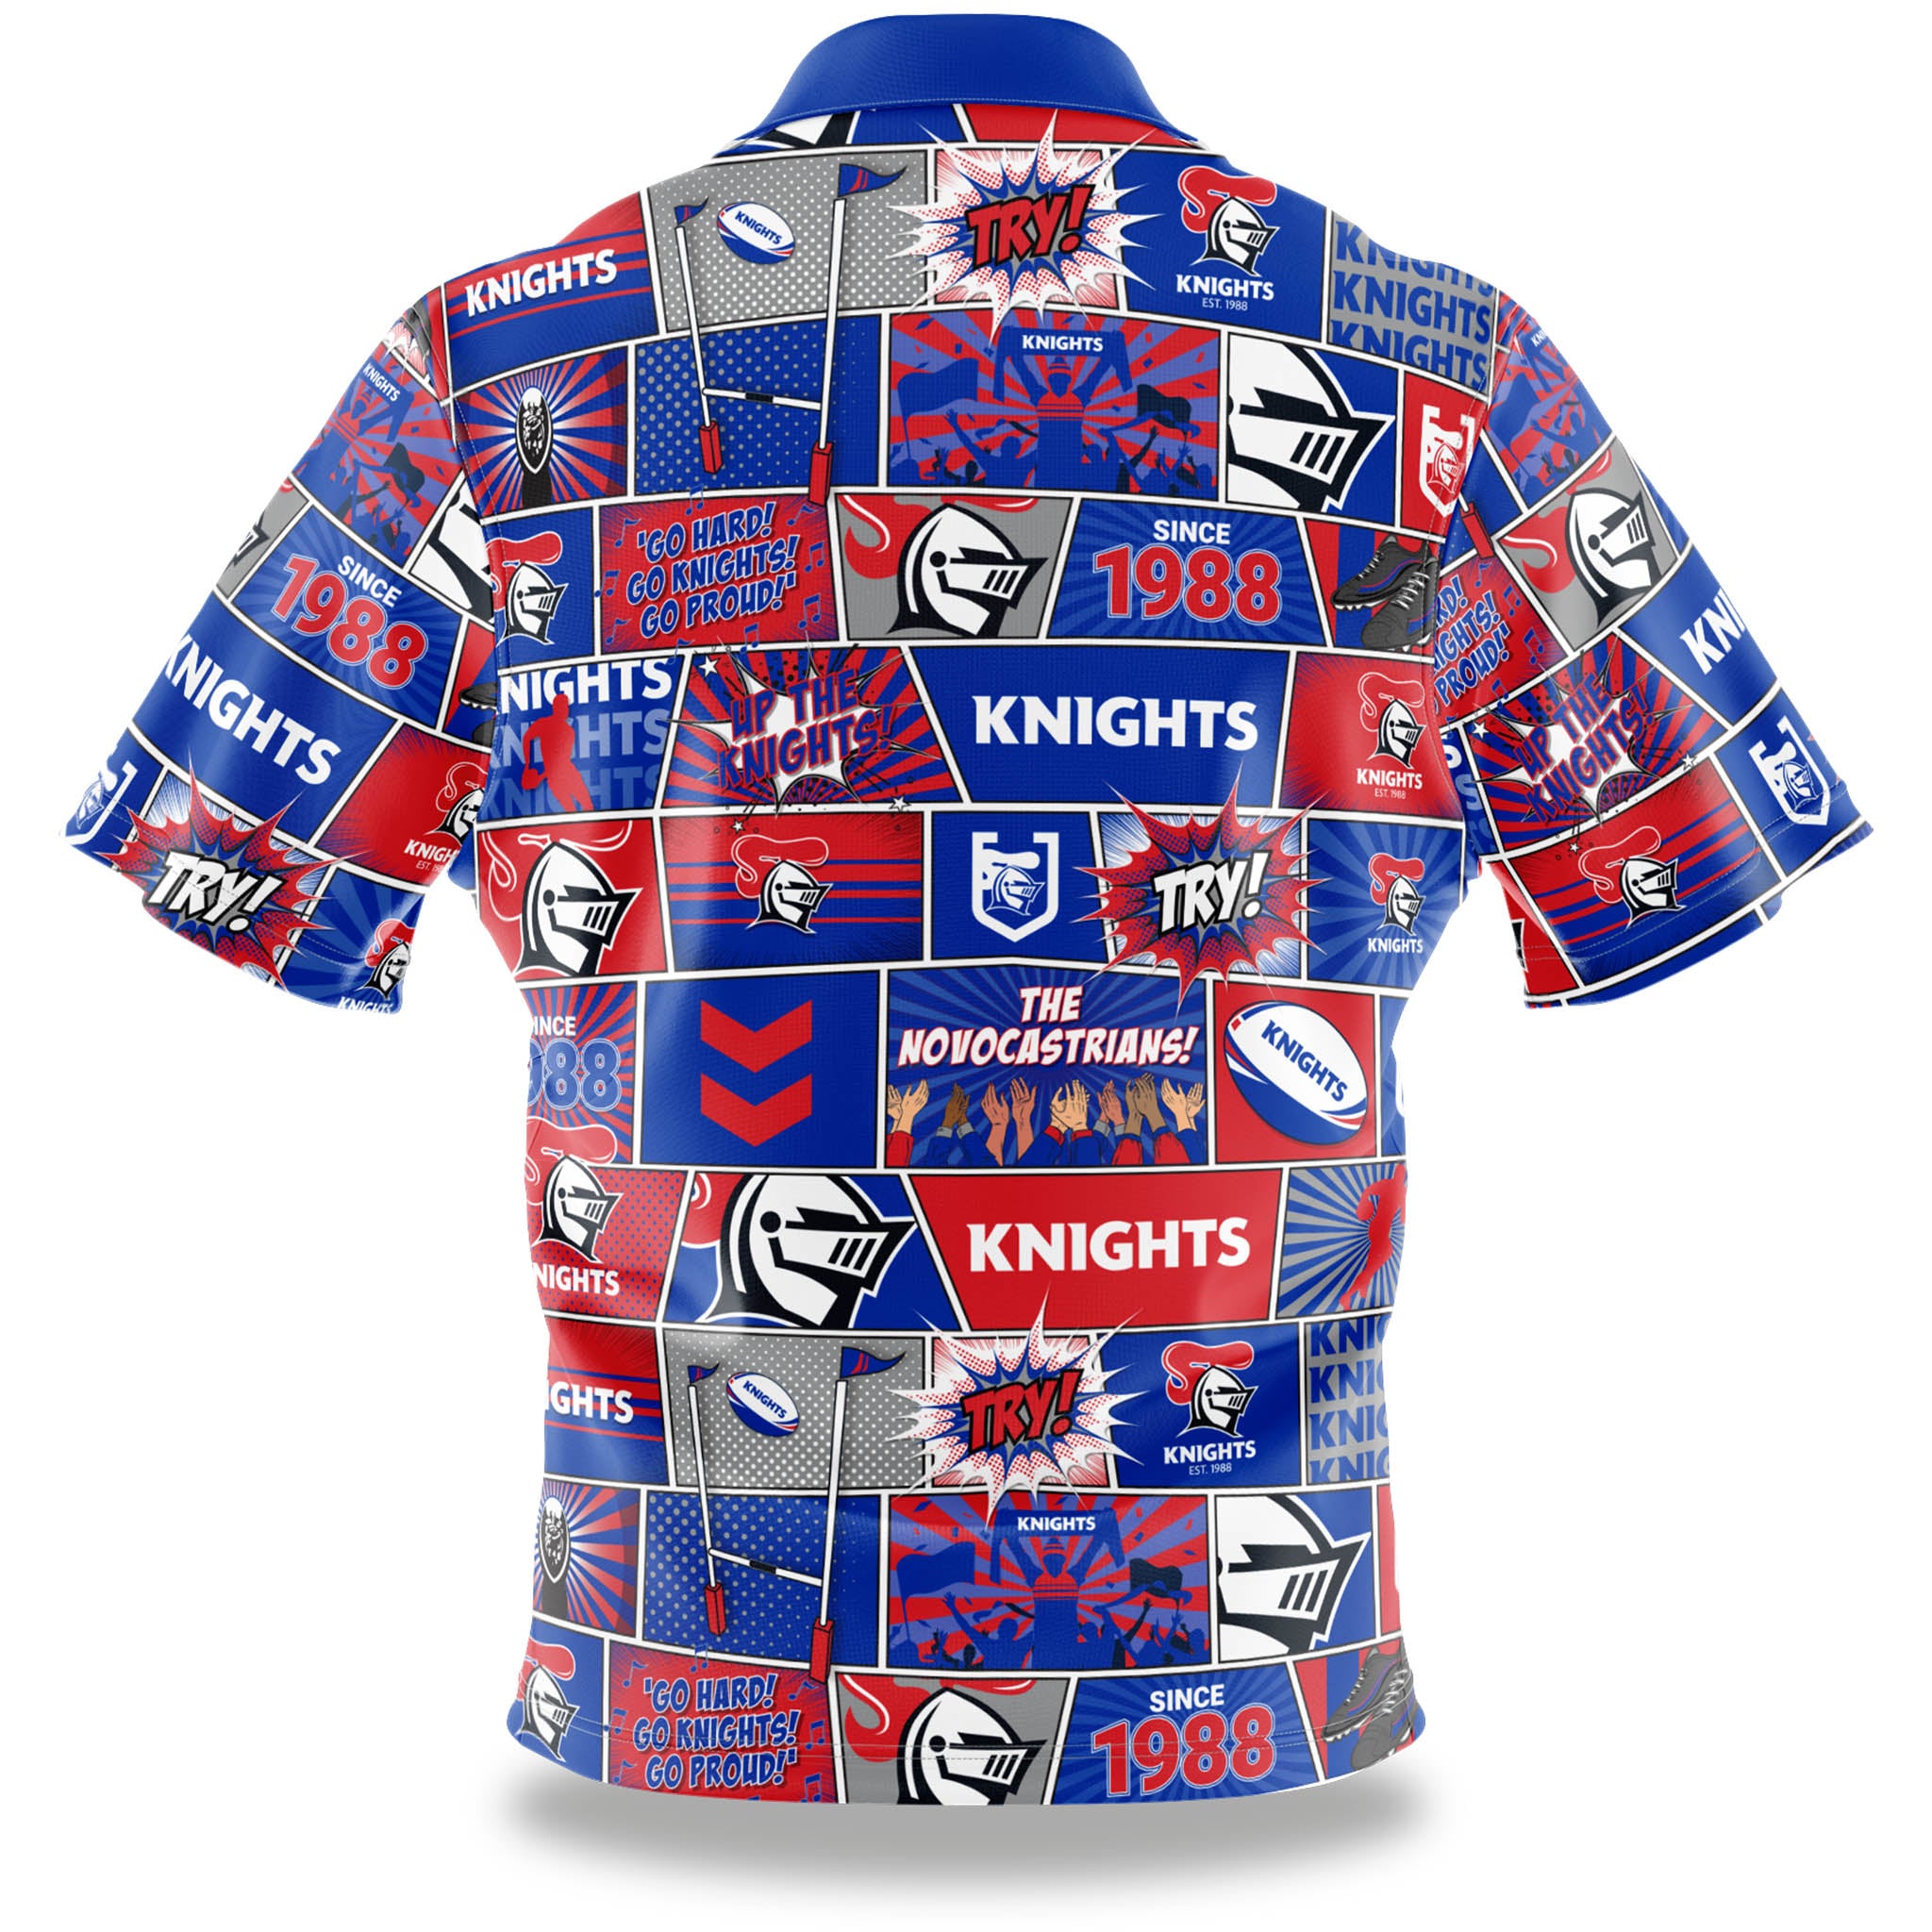 Knights Fanatics Shirt - The Rugby Shop Darwin